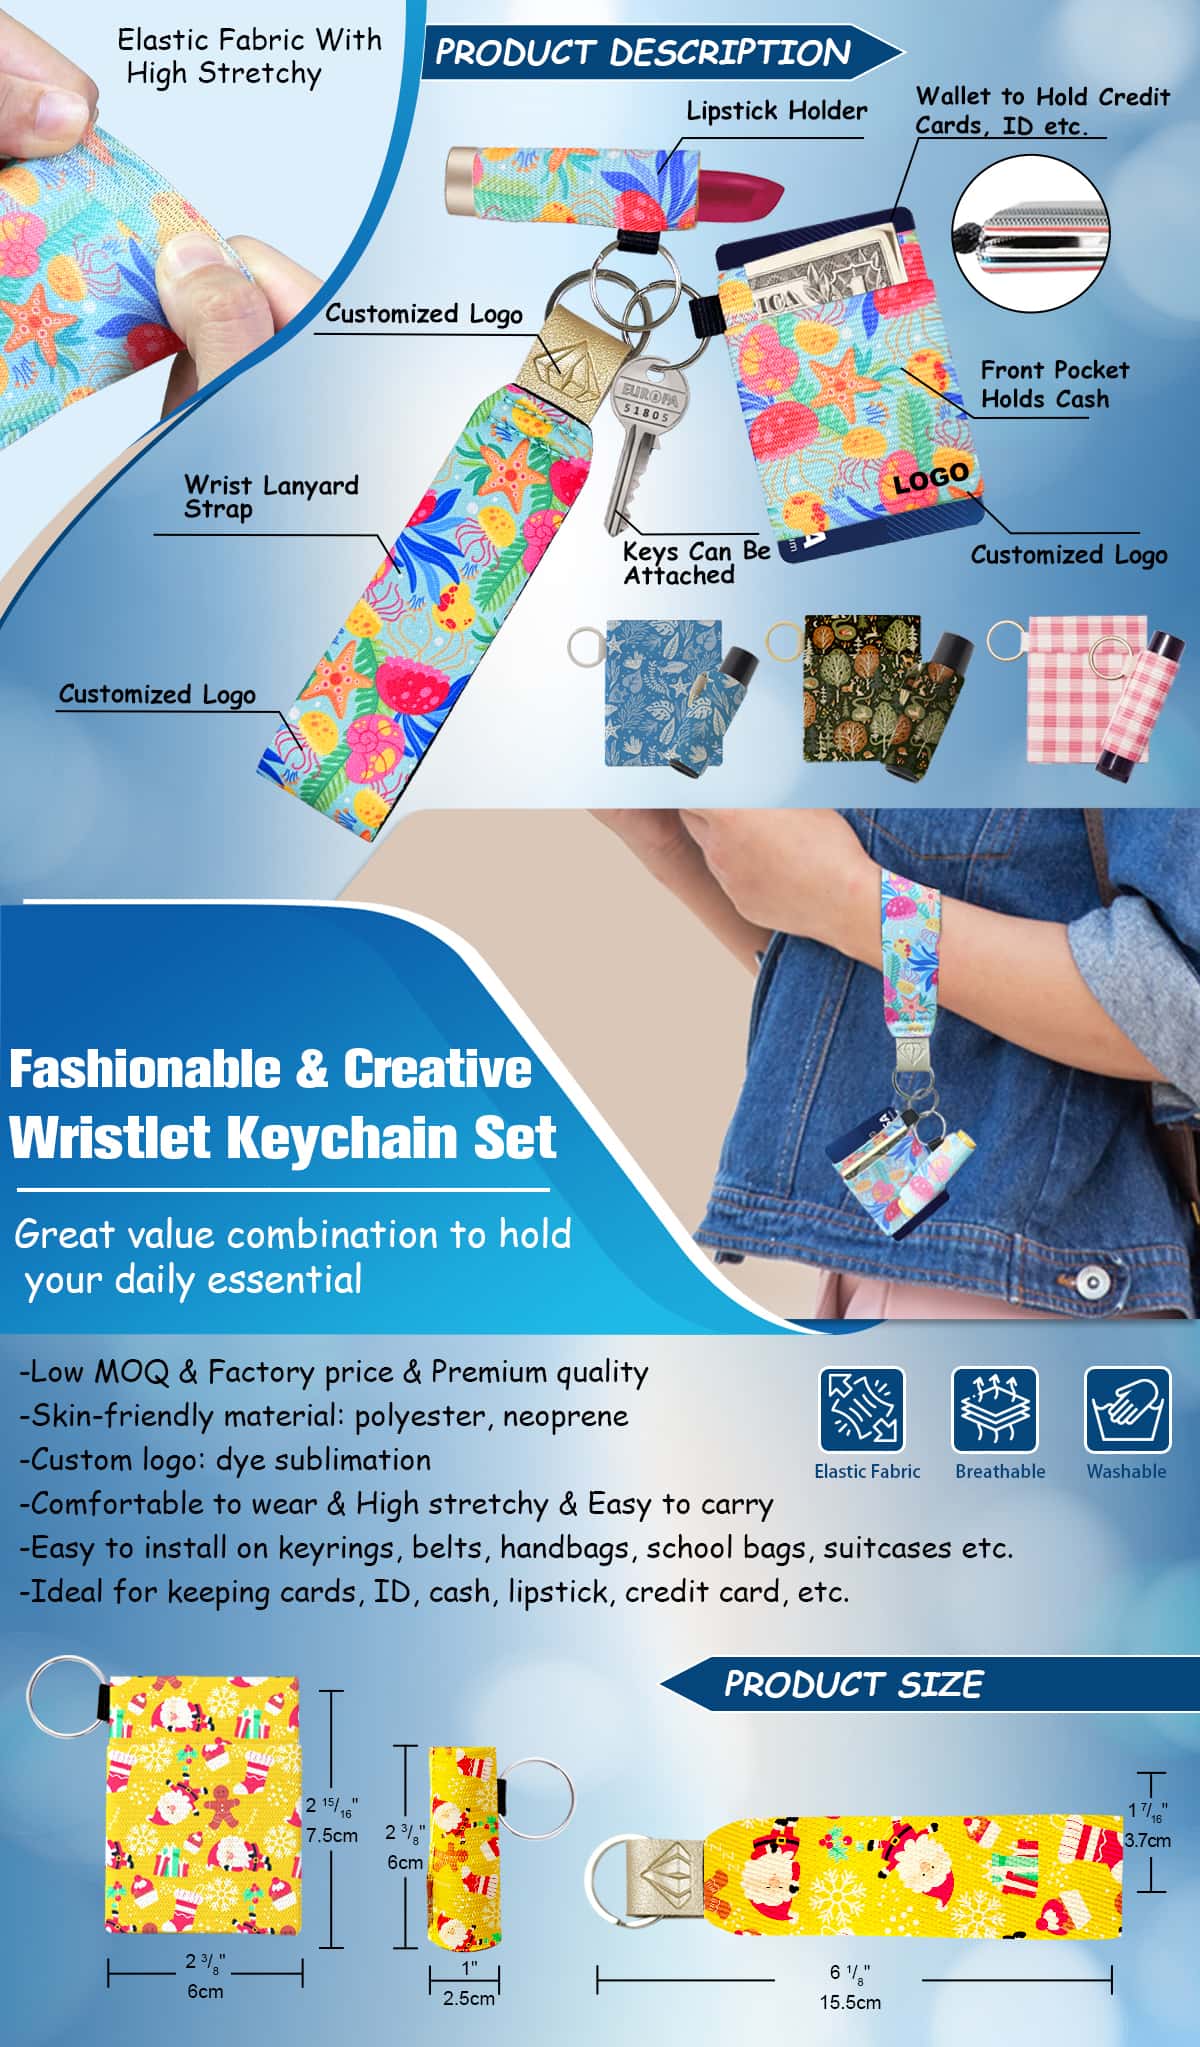 Fashional & Creative Wristlet Keychain Set